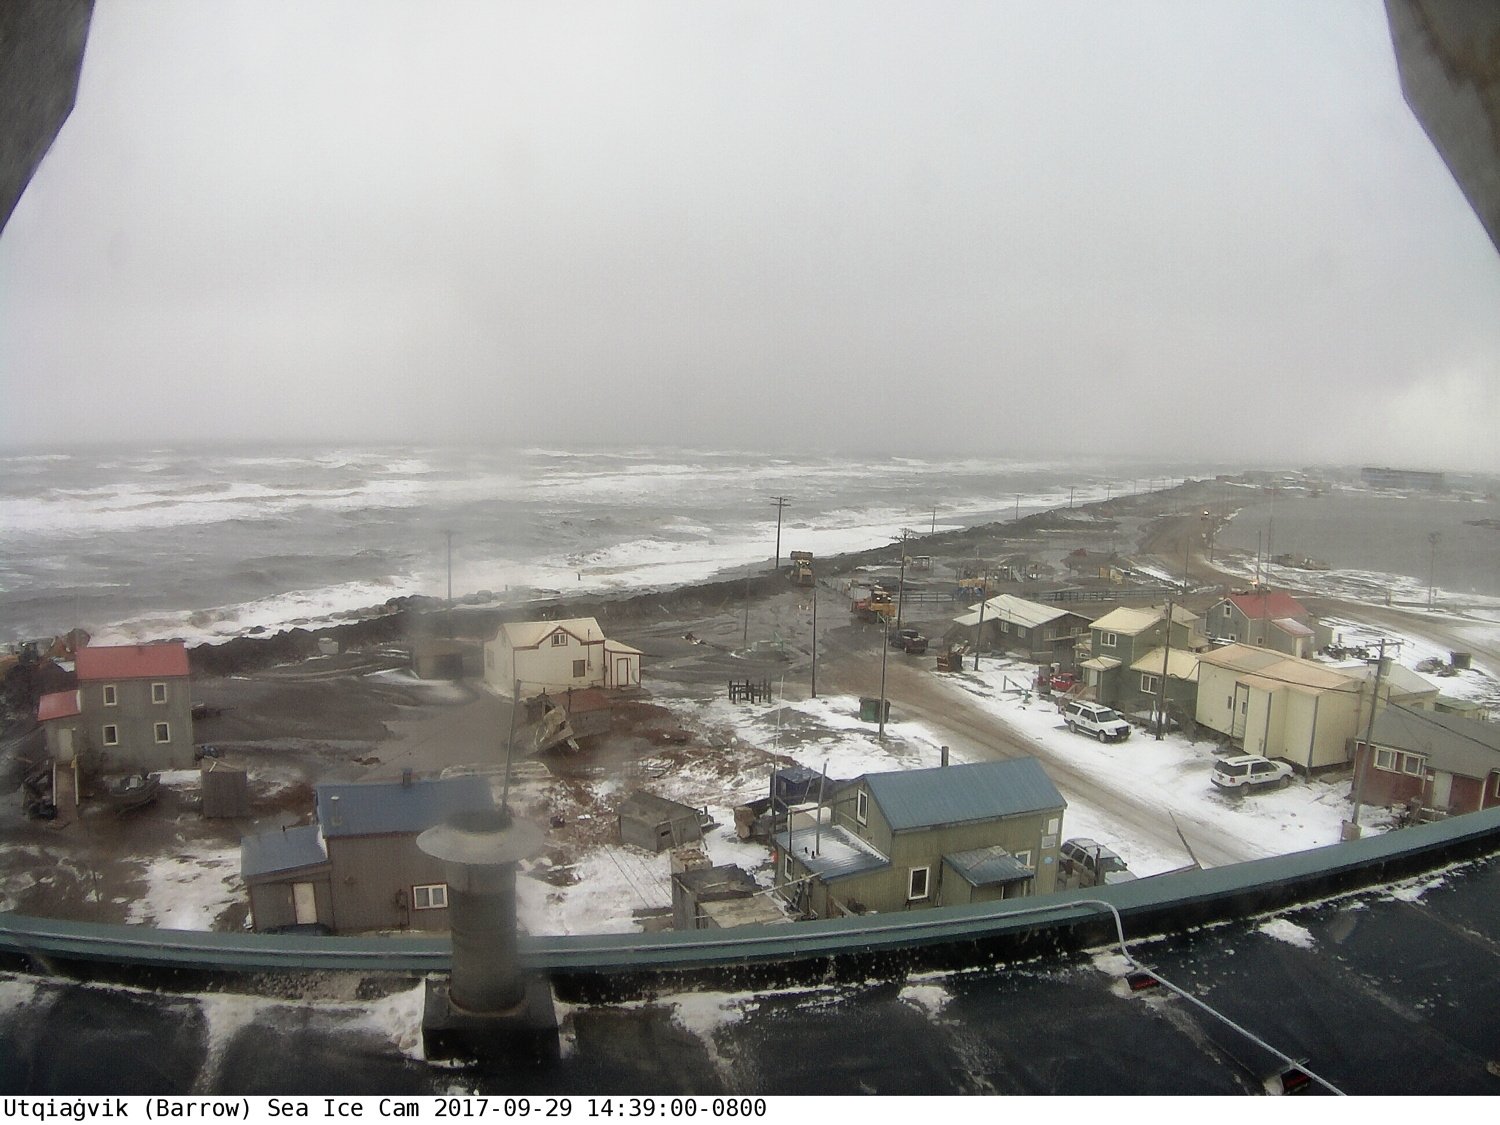 Deep Cold: Alaska Weather & Climate: Utqia&vik Wind Events